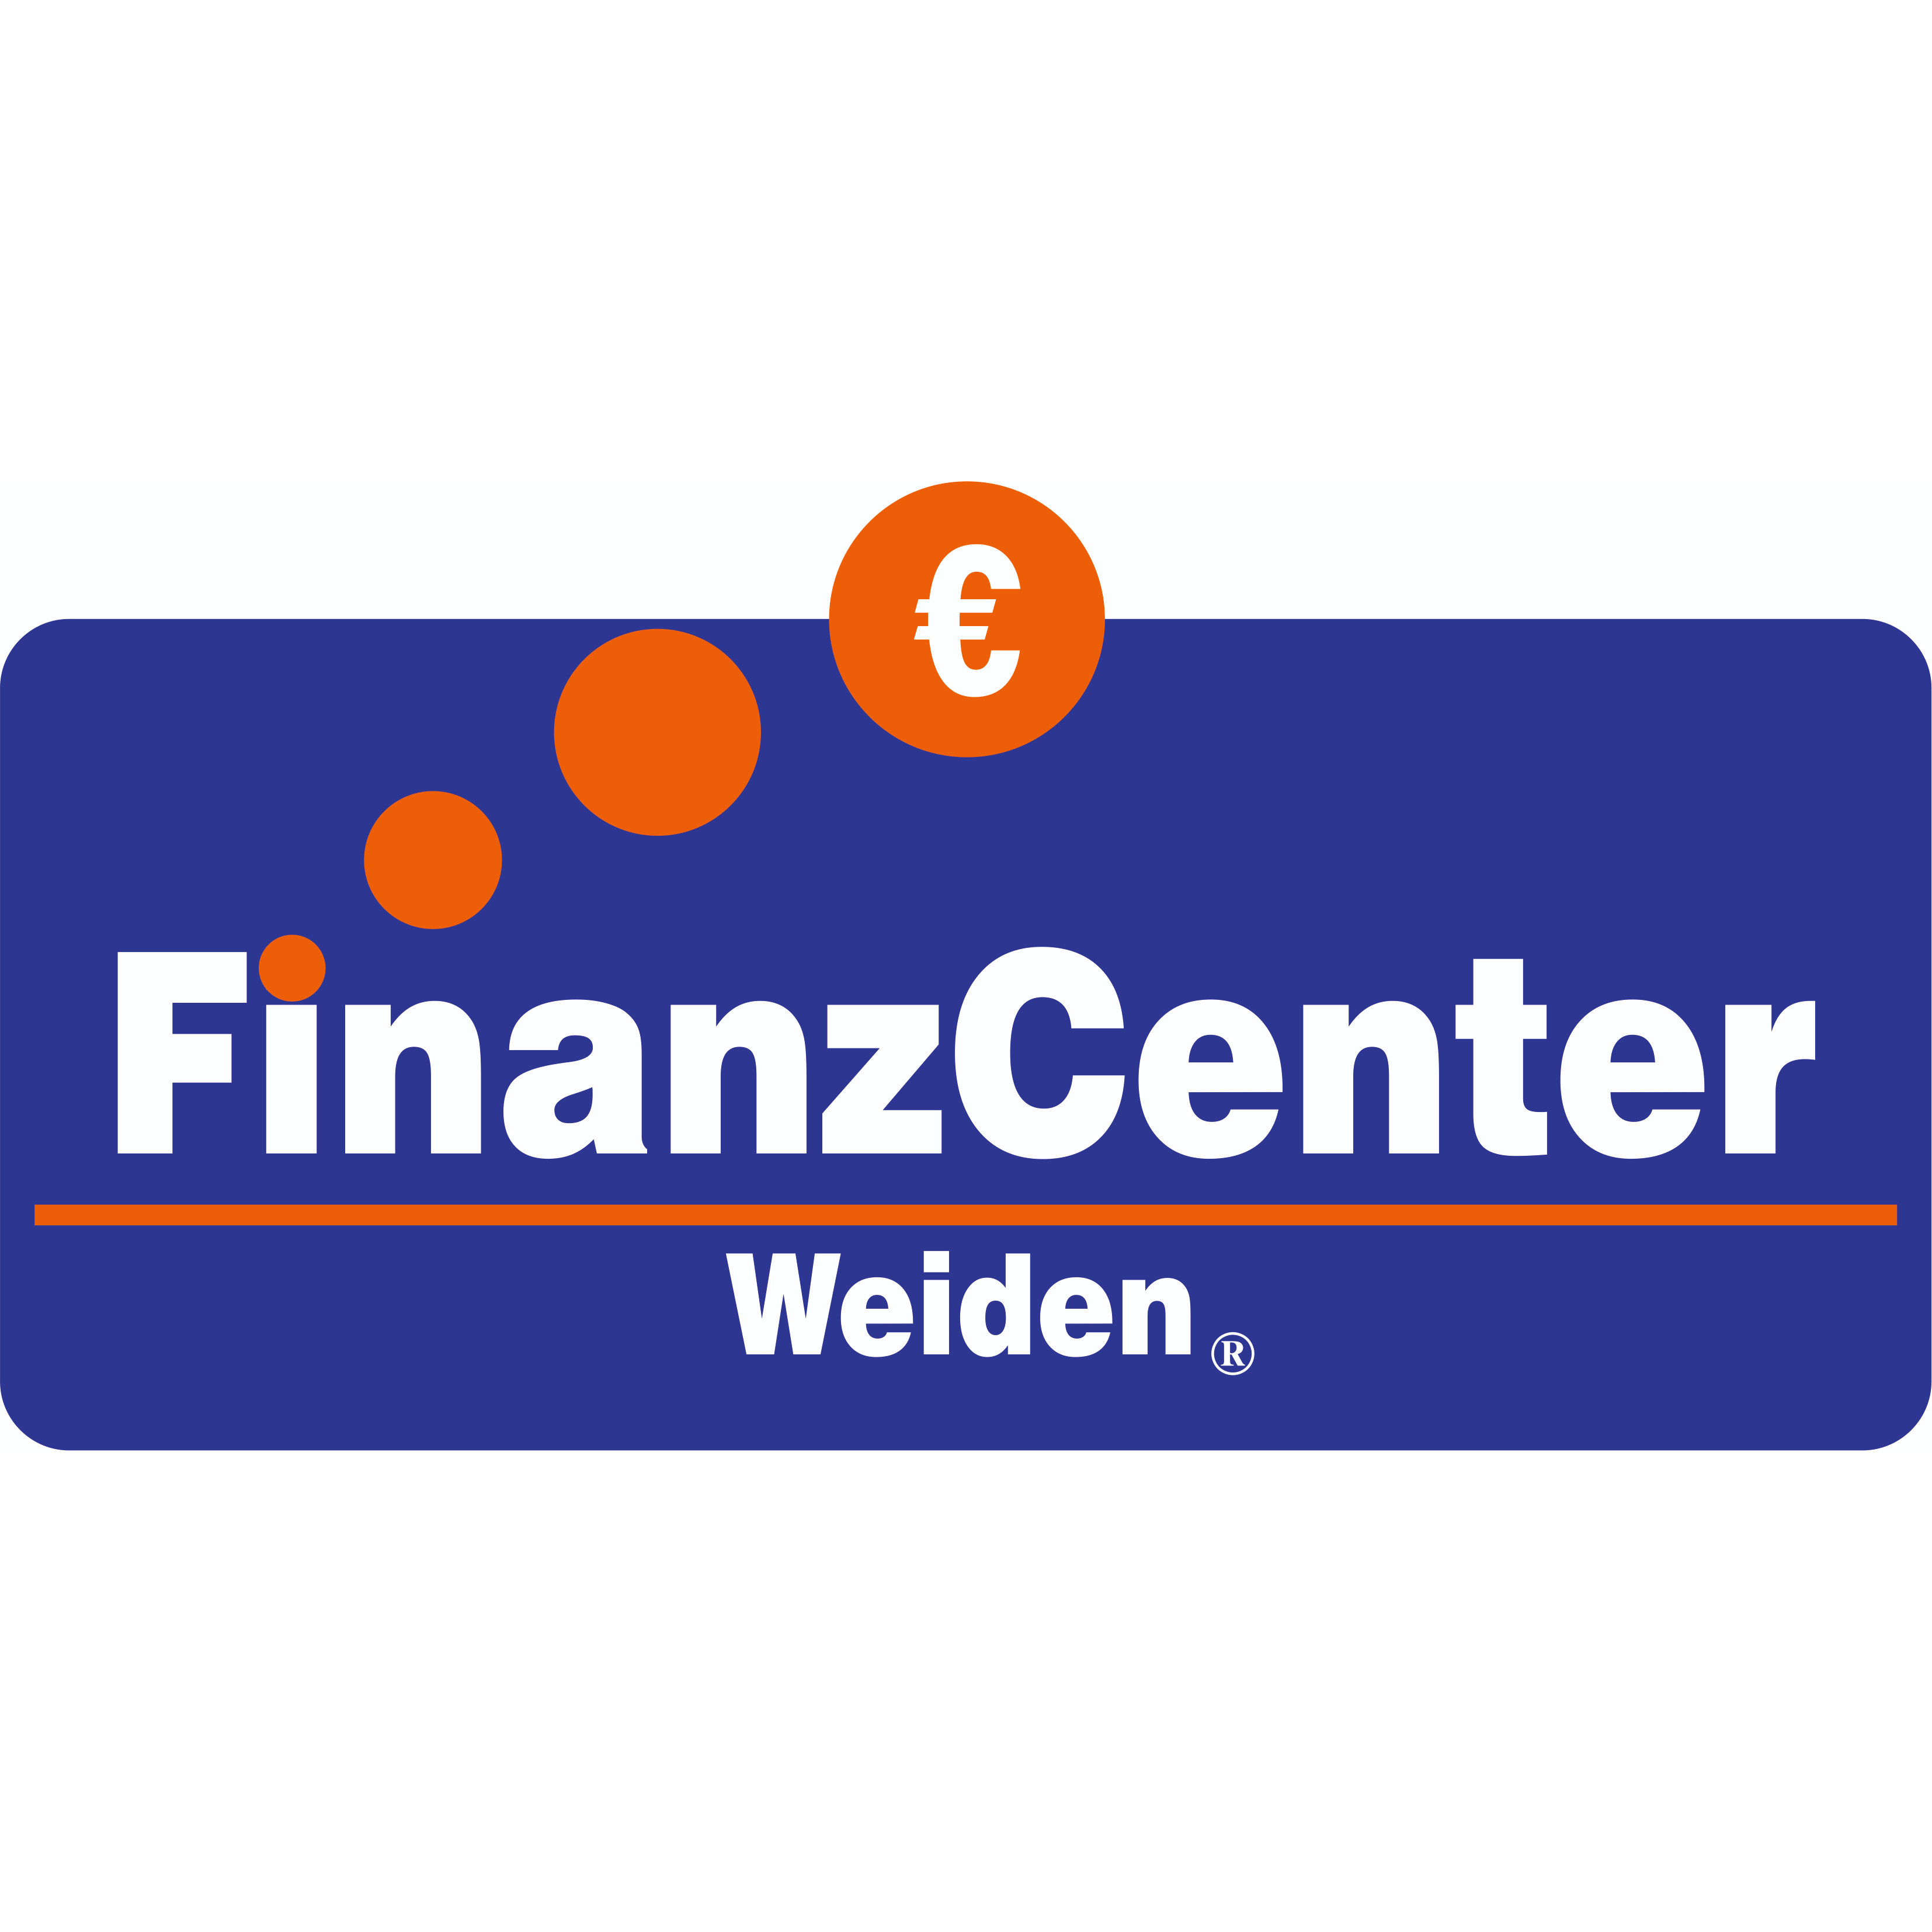 FinanzCenter - Weiden Logo